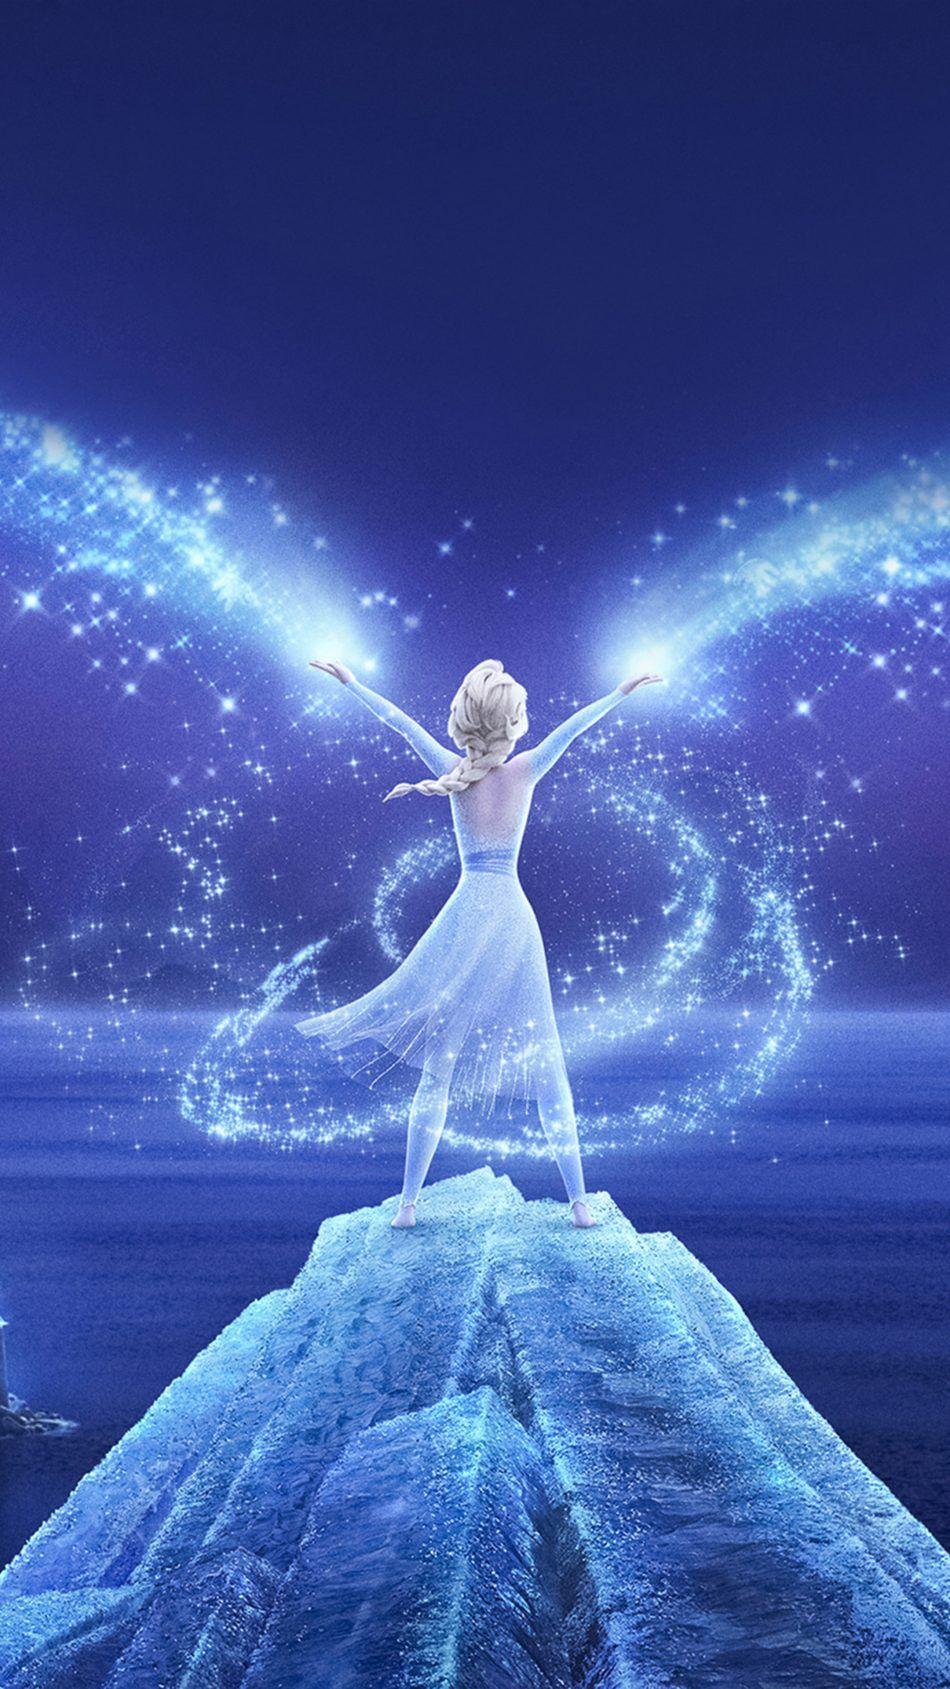 Download Queen Elsa Frozen 2 2019 Free Pure 4K Ultra HD